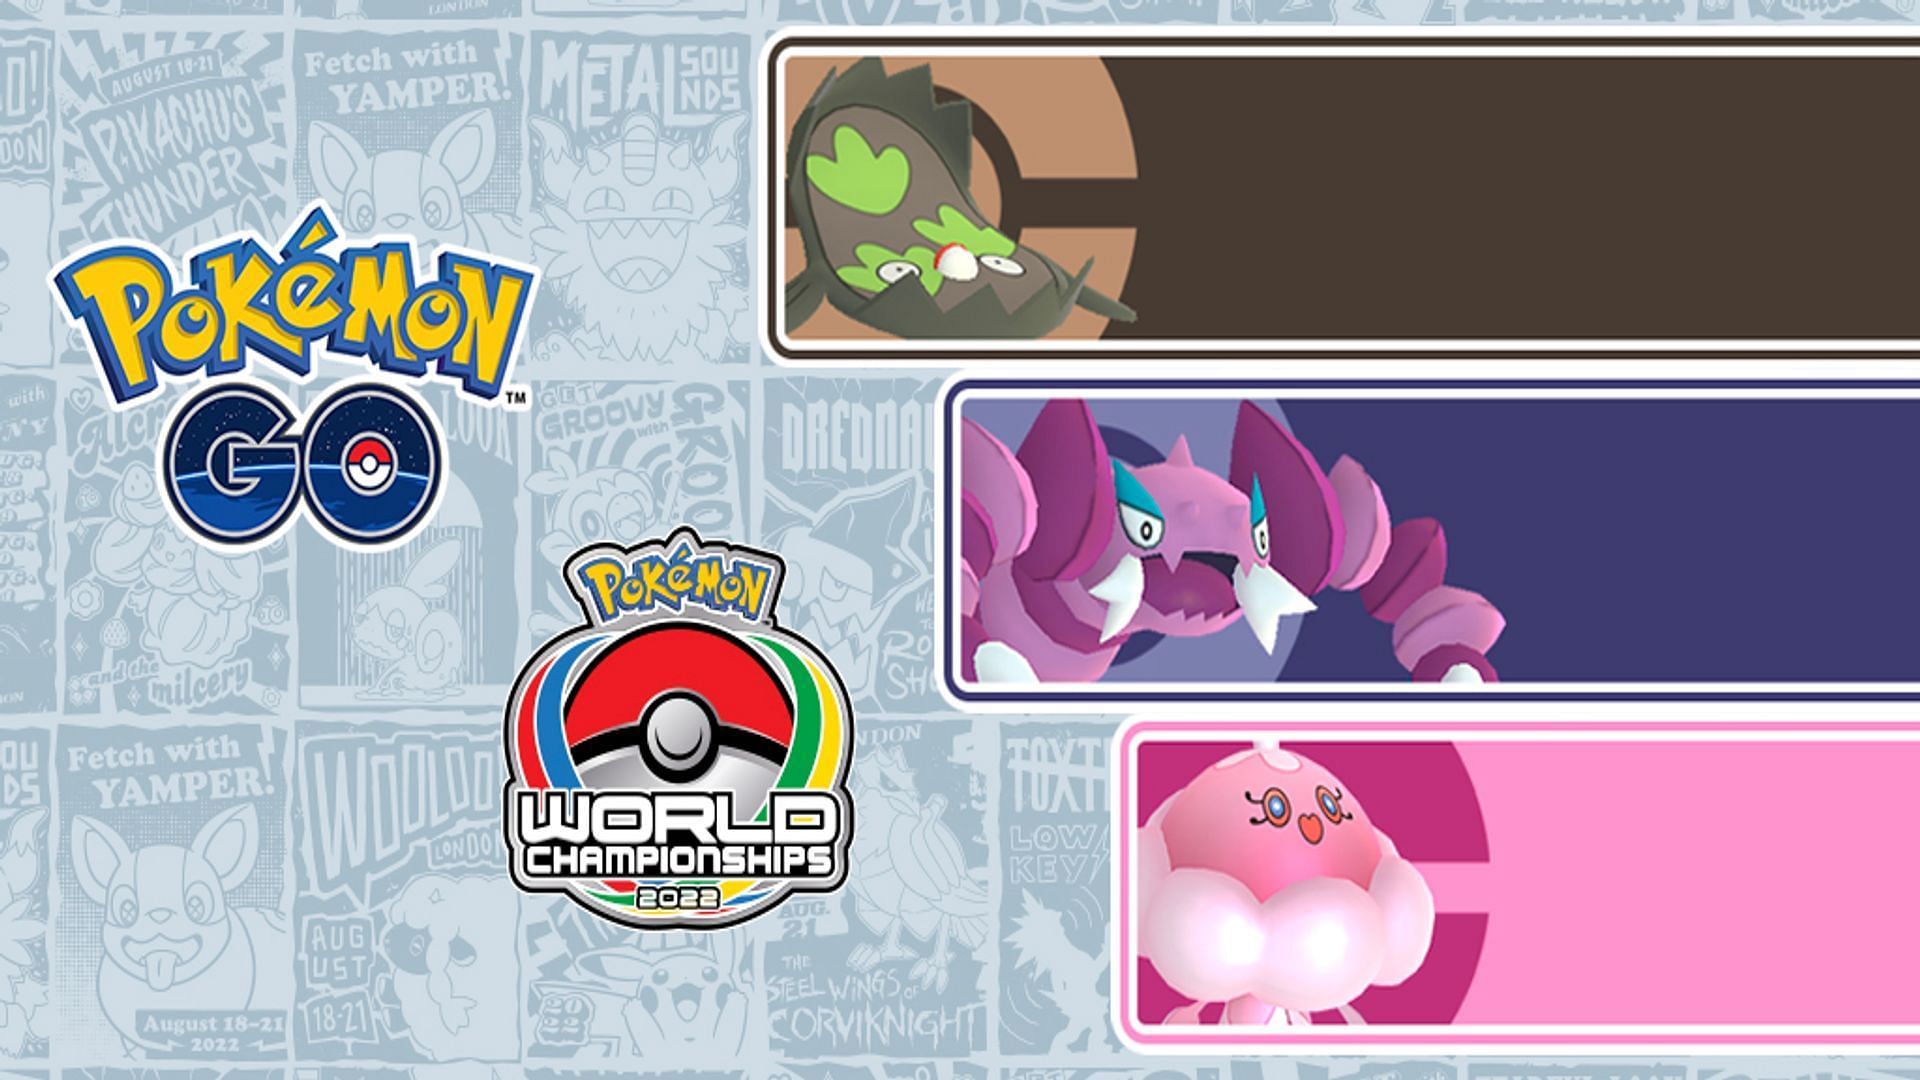 Official artwork for the Pokemon World Championships (Image via Niantic)